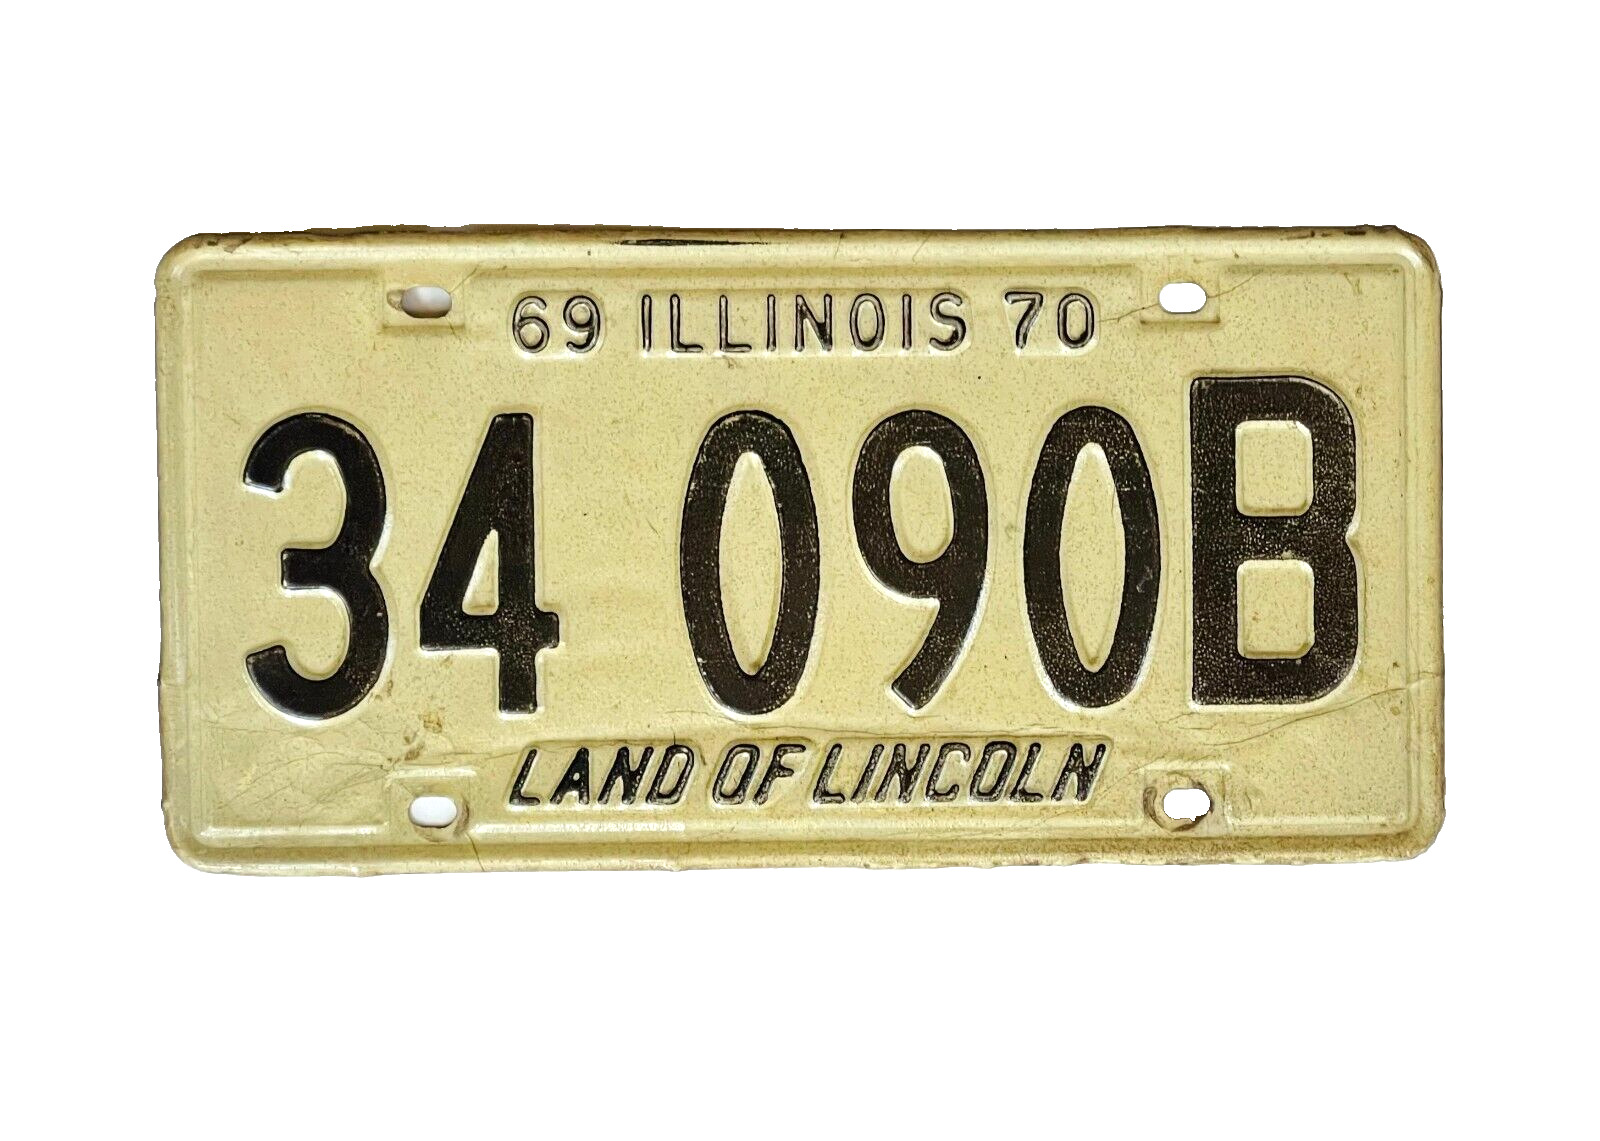 ILLINOIS 1970  -  (1) vintage Truck license plate